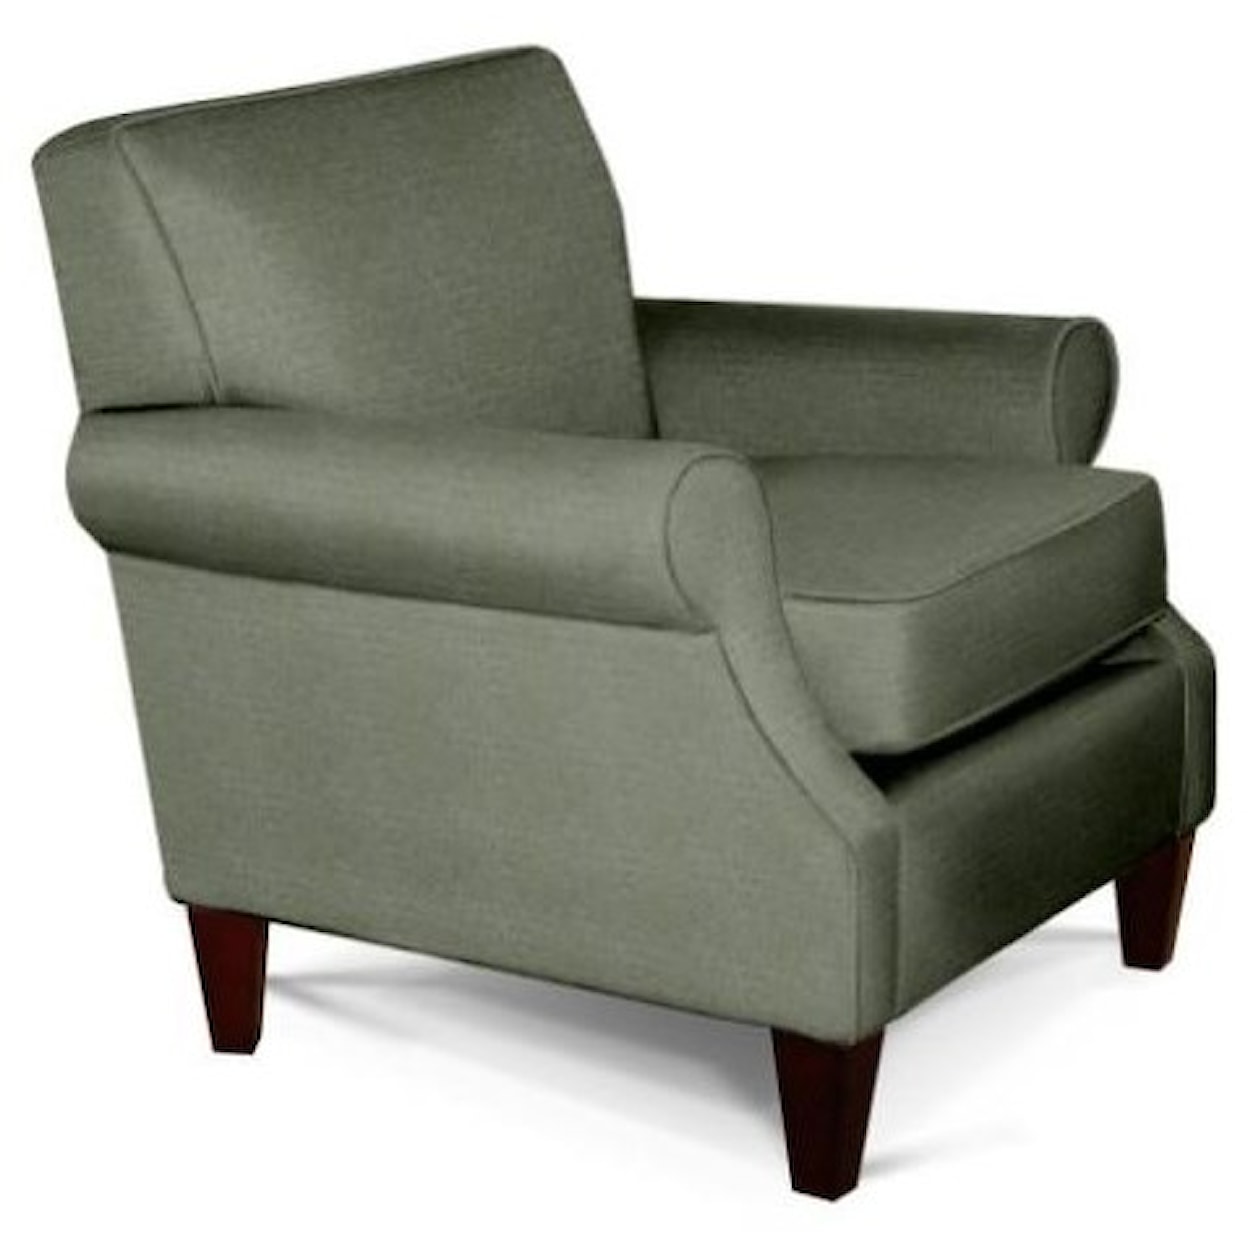 England Lennie Upholstered Chair